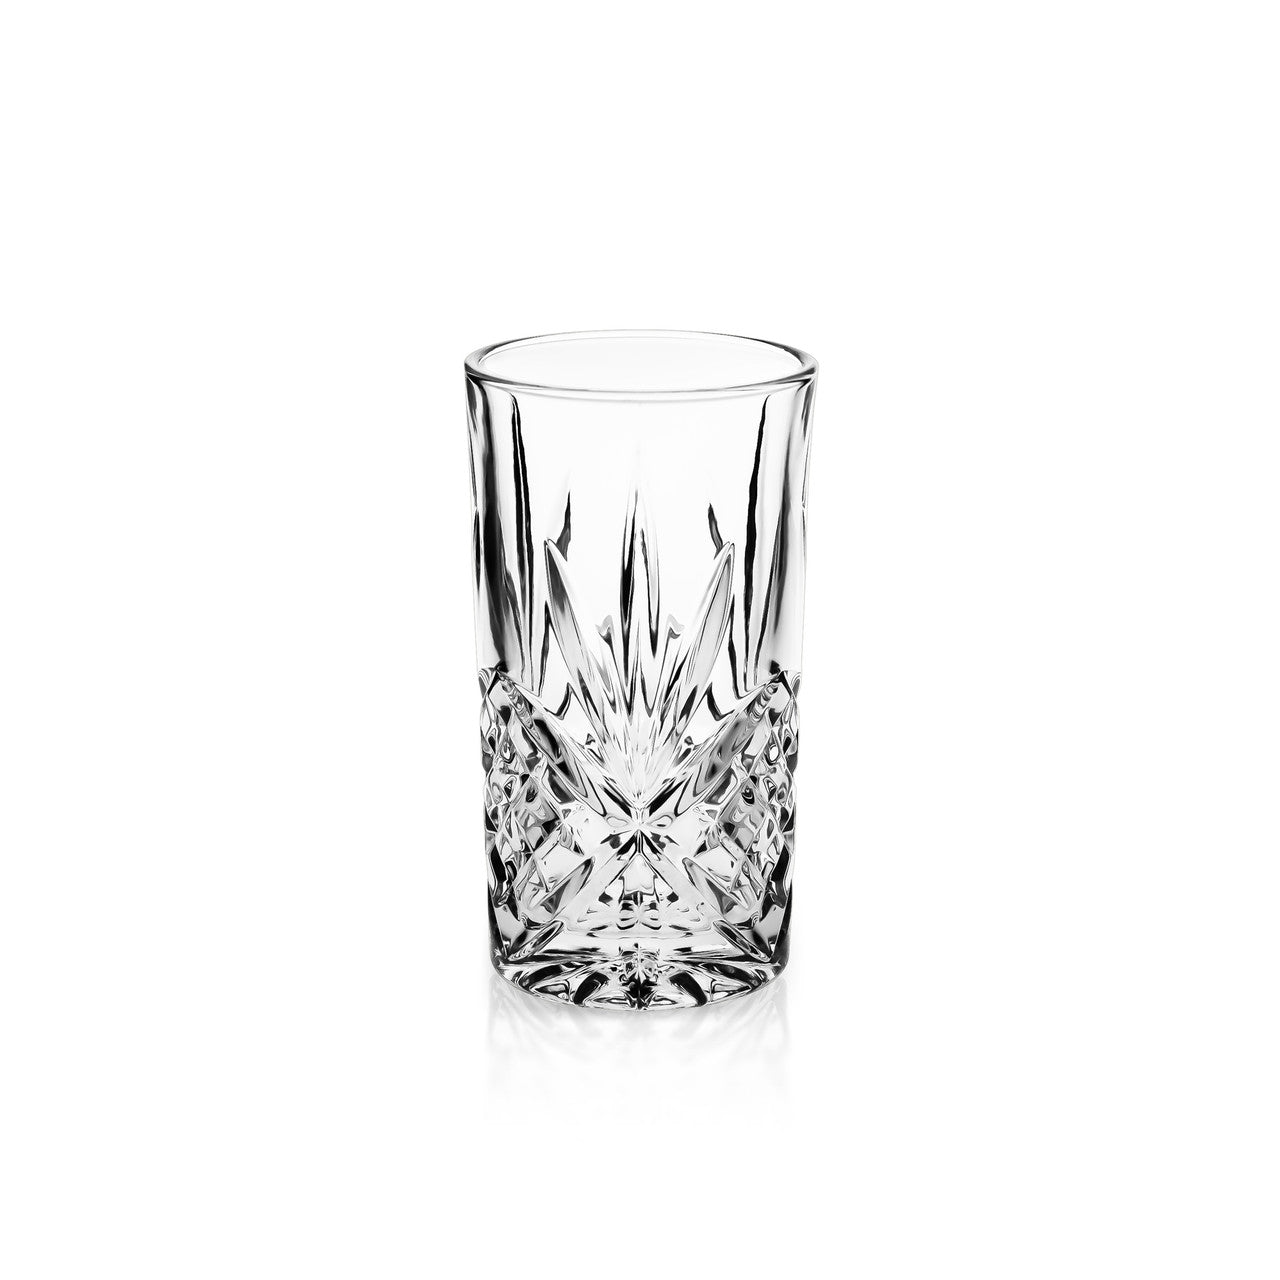 Tipperary Crystal Belvedere Hi-Ball Glasses - Set of 6